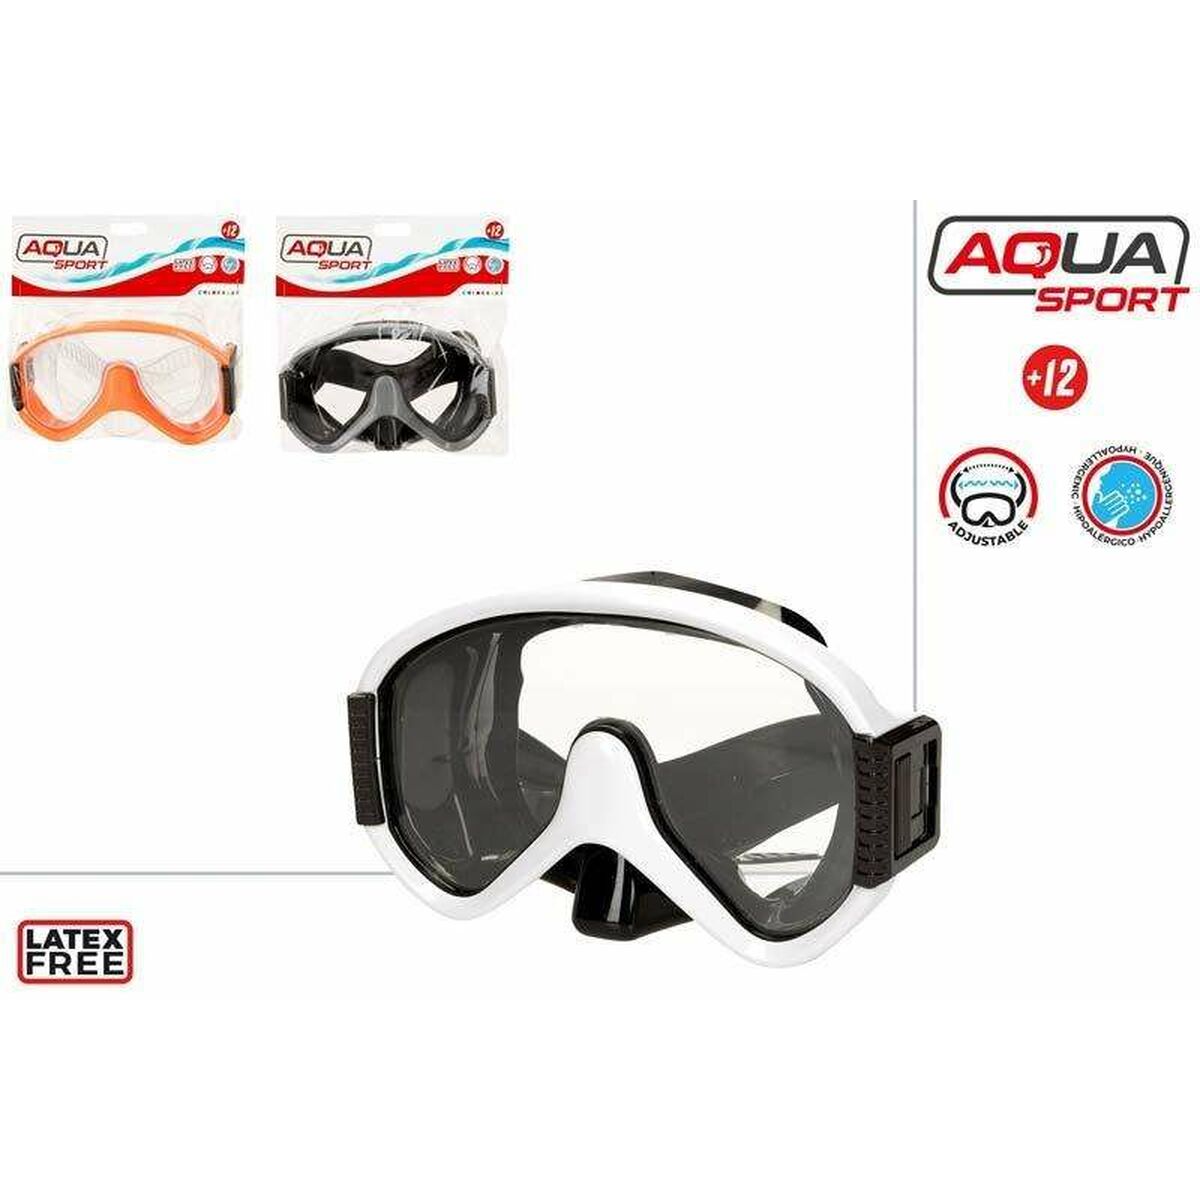 Diving Mask Colorbaby Aqua Sport Adults